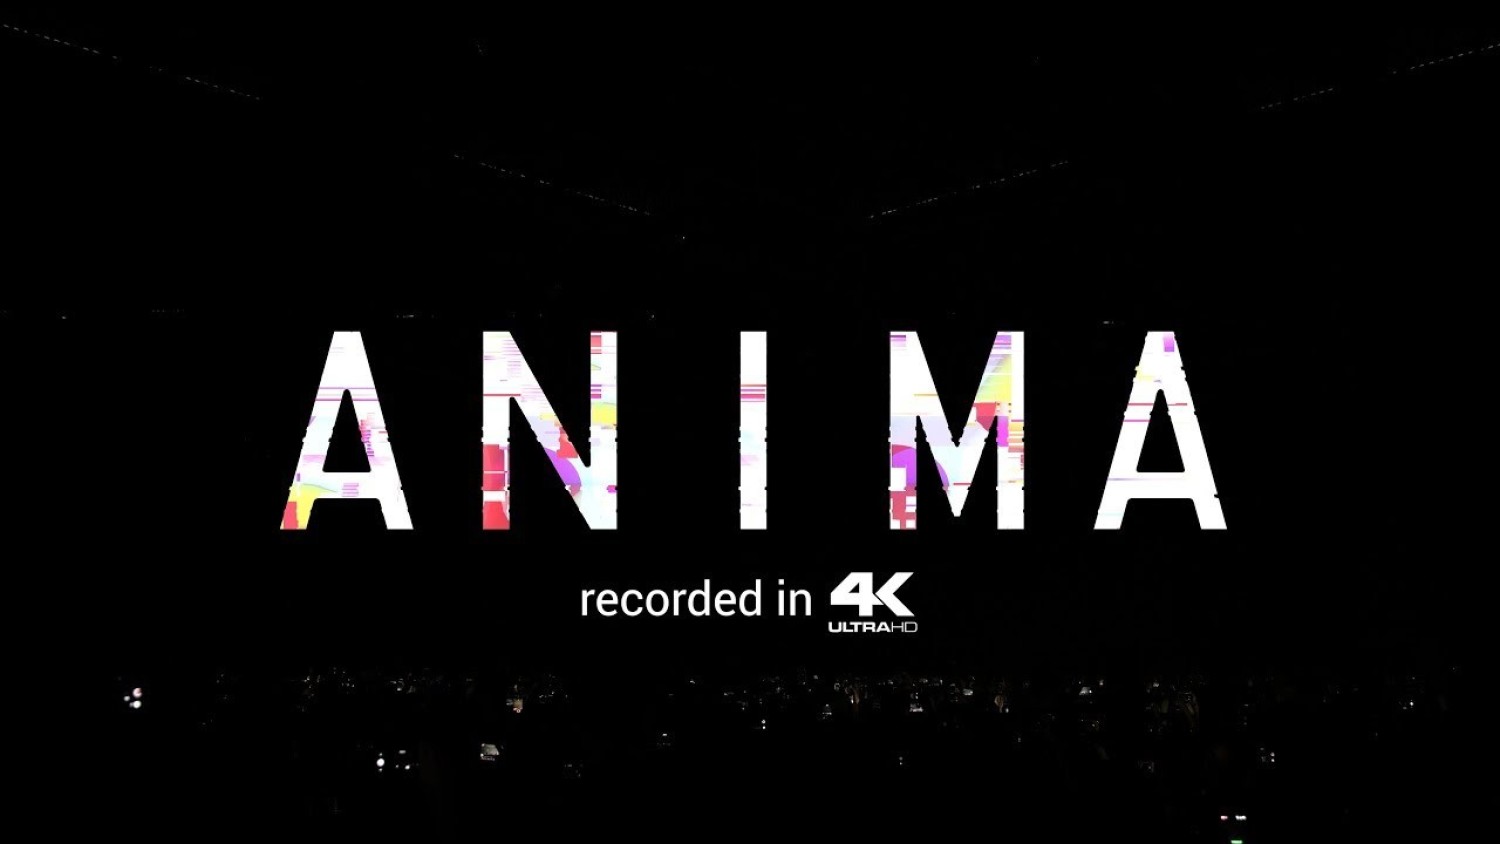 Party nieuws: Martin Garrix publiceert live show ANIMA Amsterdam RAI